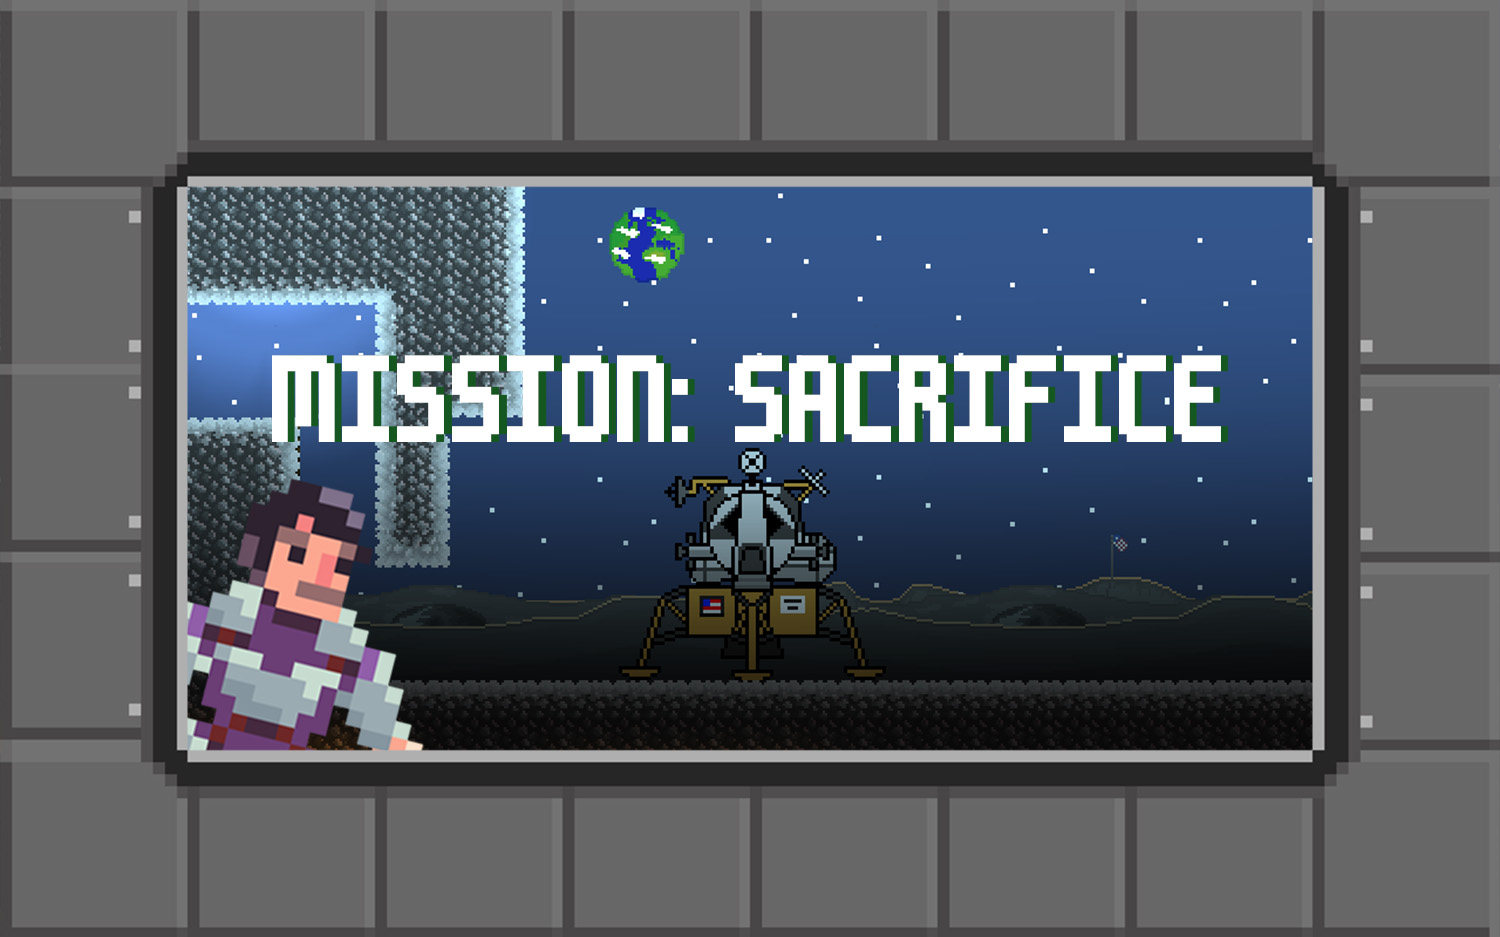 Mission: Sacrifice